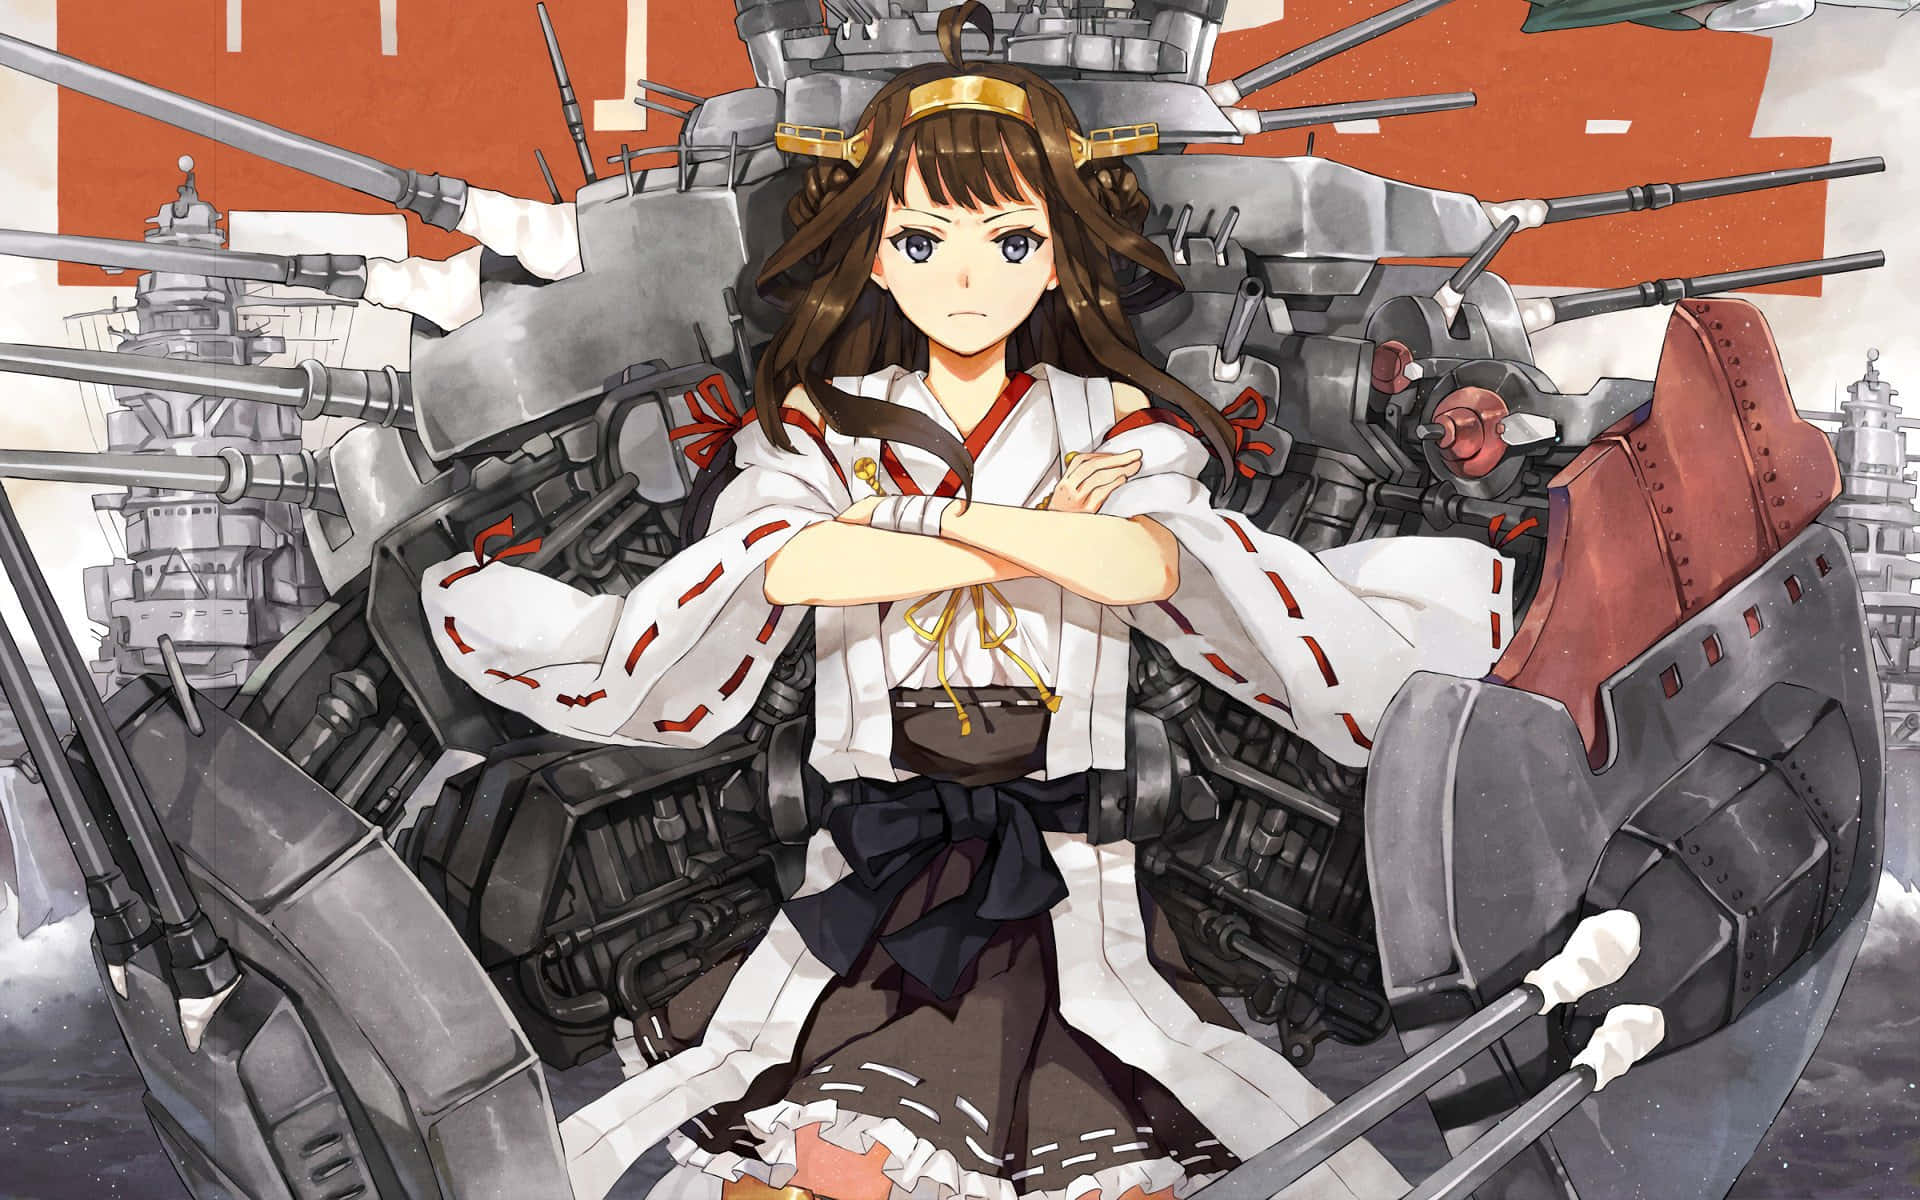 Set Sail! Explore The High Seas With The Anime Game Kantai Collection